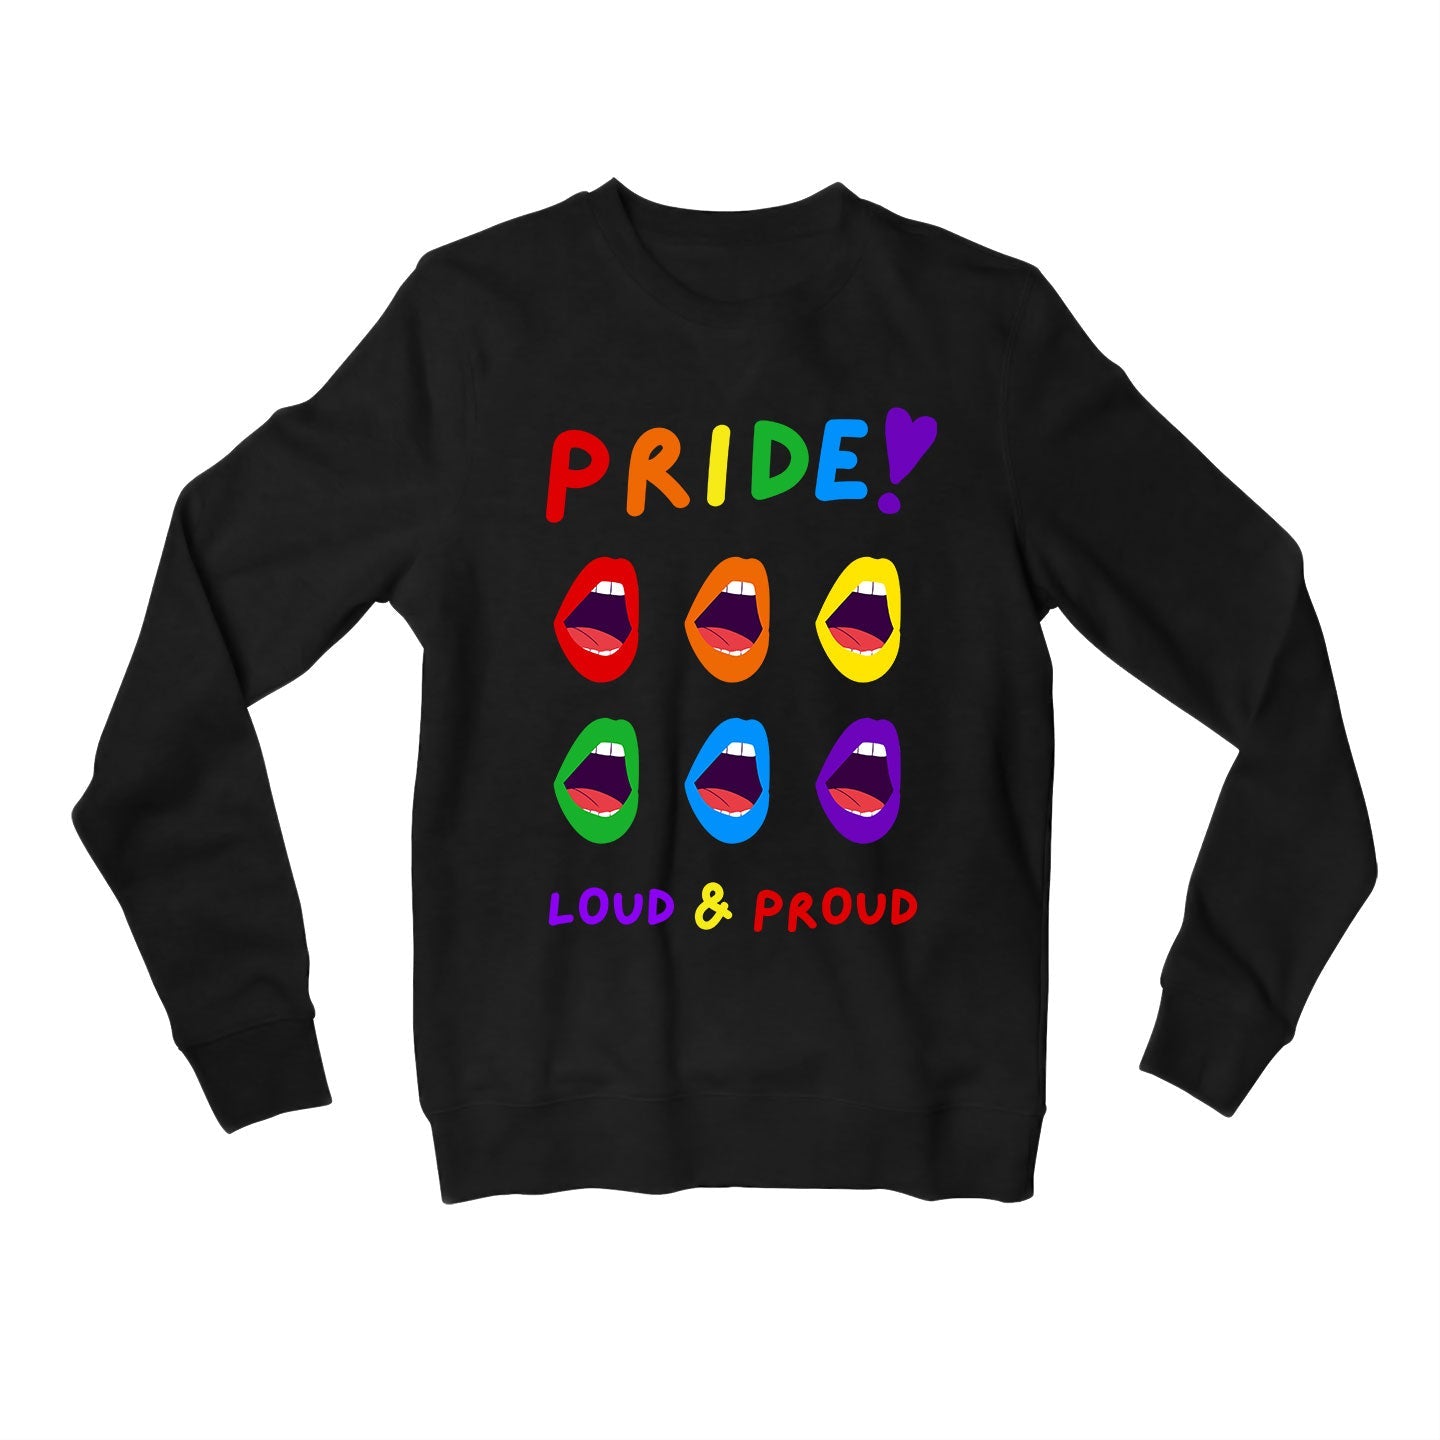 pride loud and proud sweatshirt upper winterwear printed graphic stylish buy online india the banyan tee tbt men women girls boys unisex black - lgbtqia+